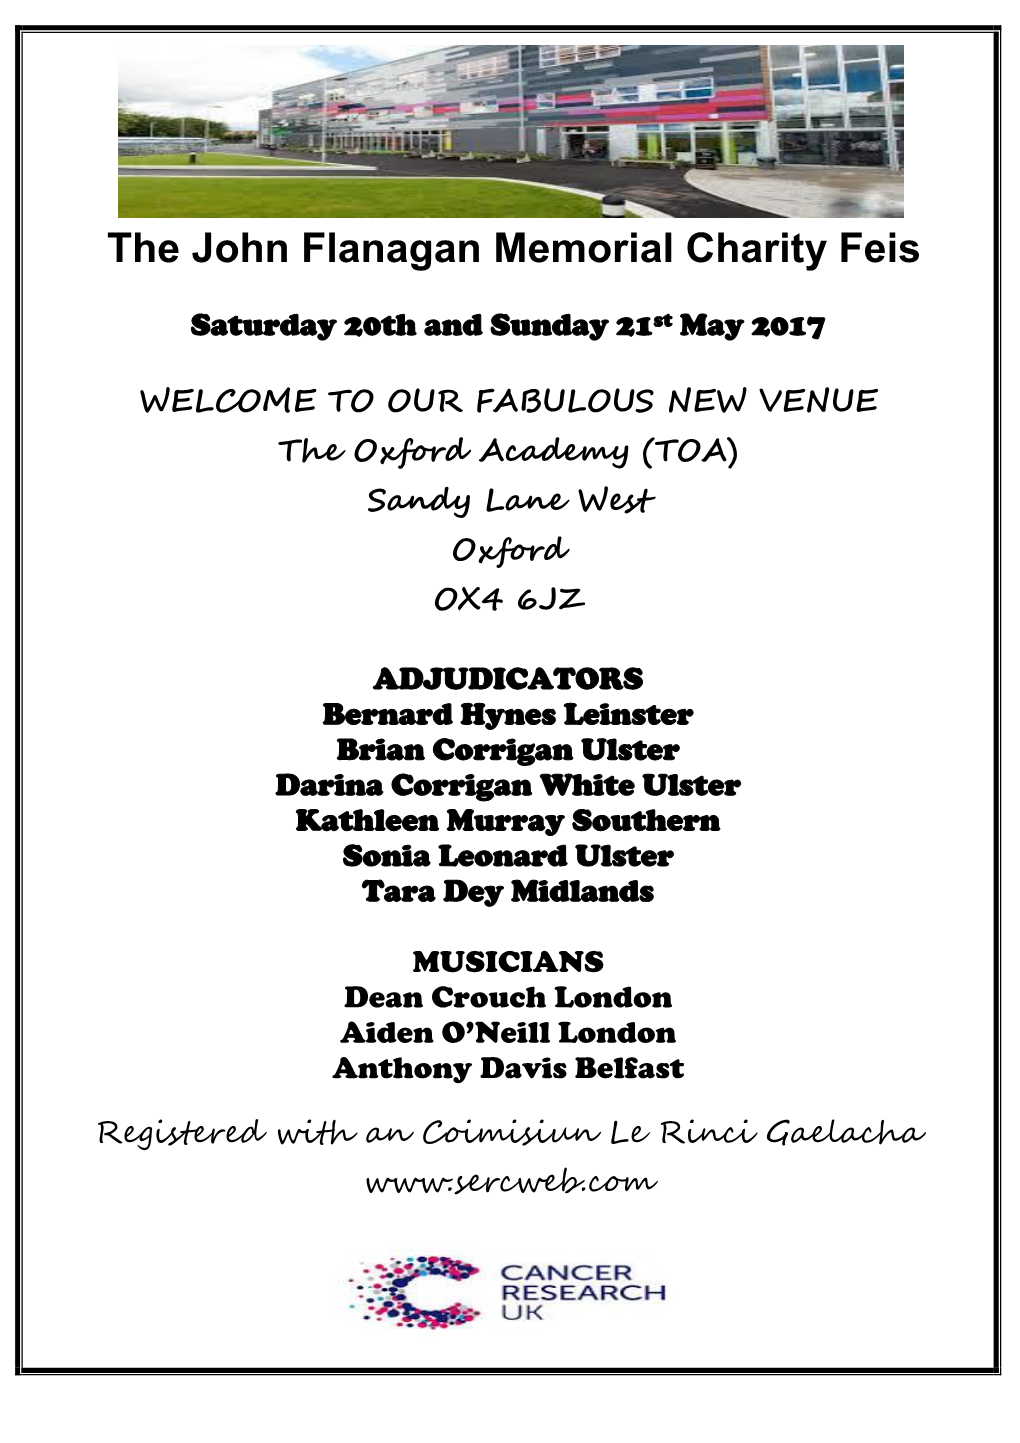 The John Flanagan Memorial Charity Feis